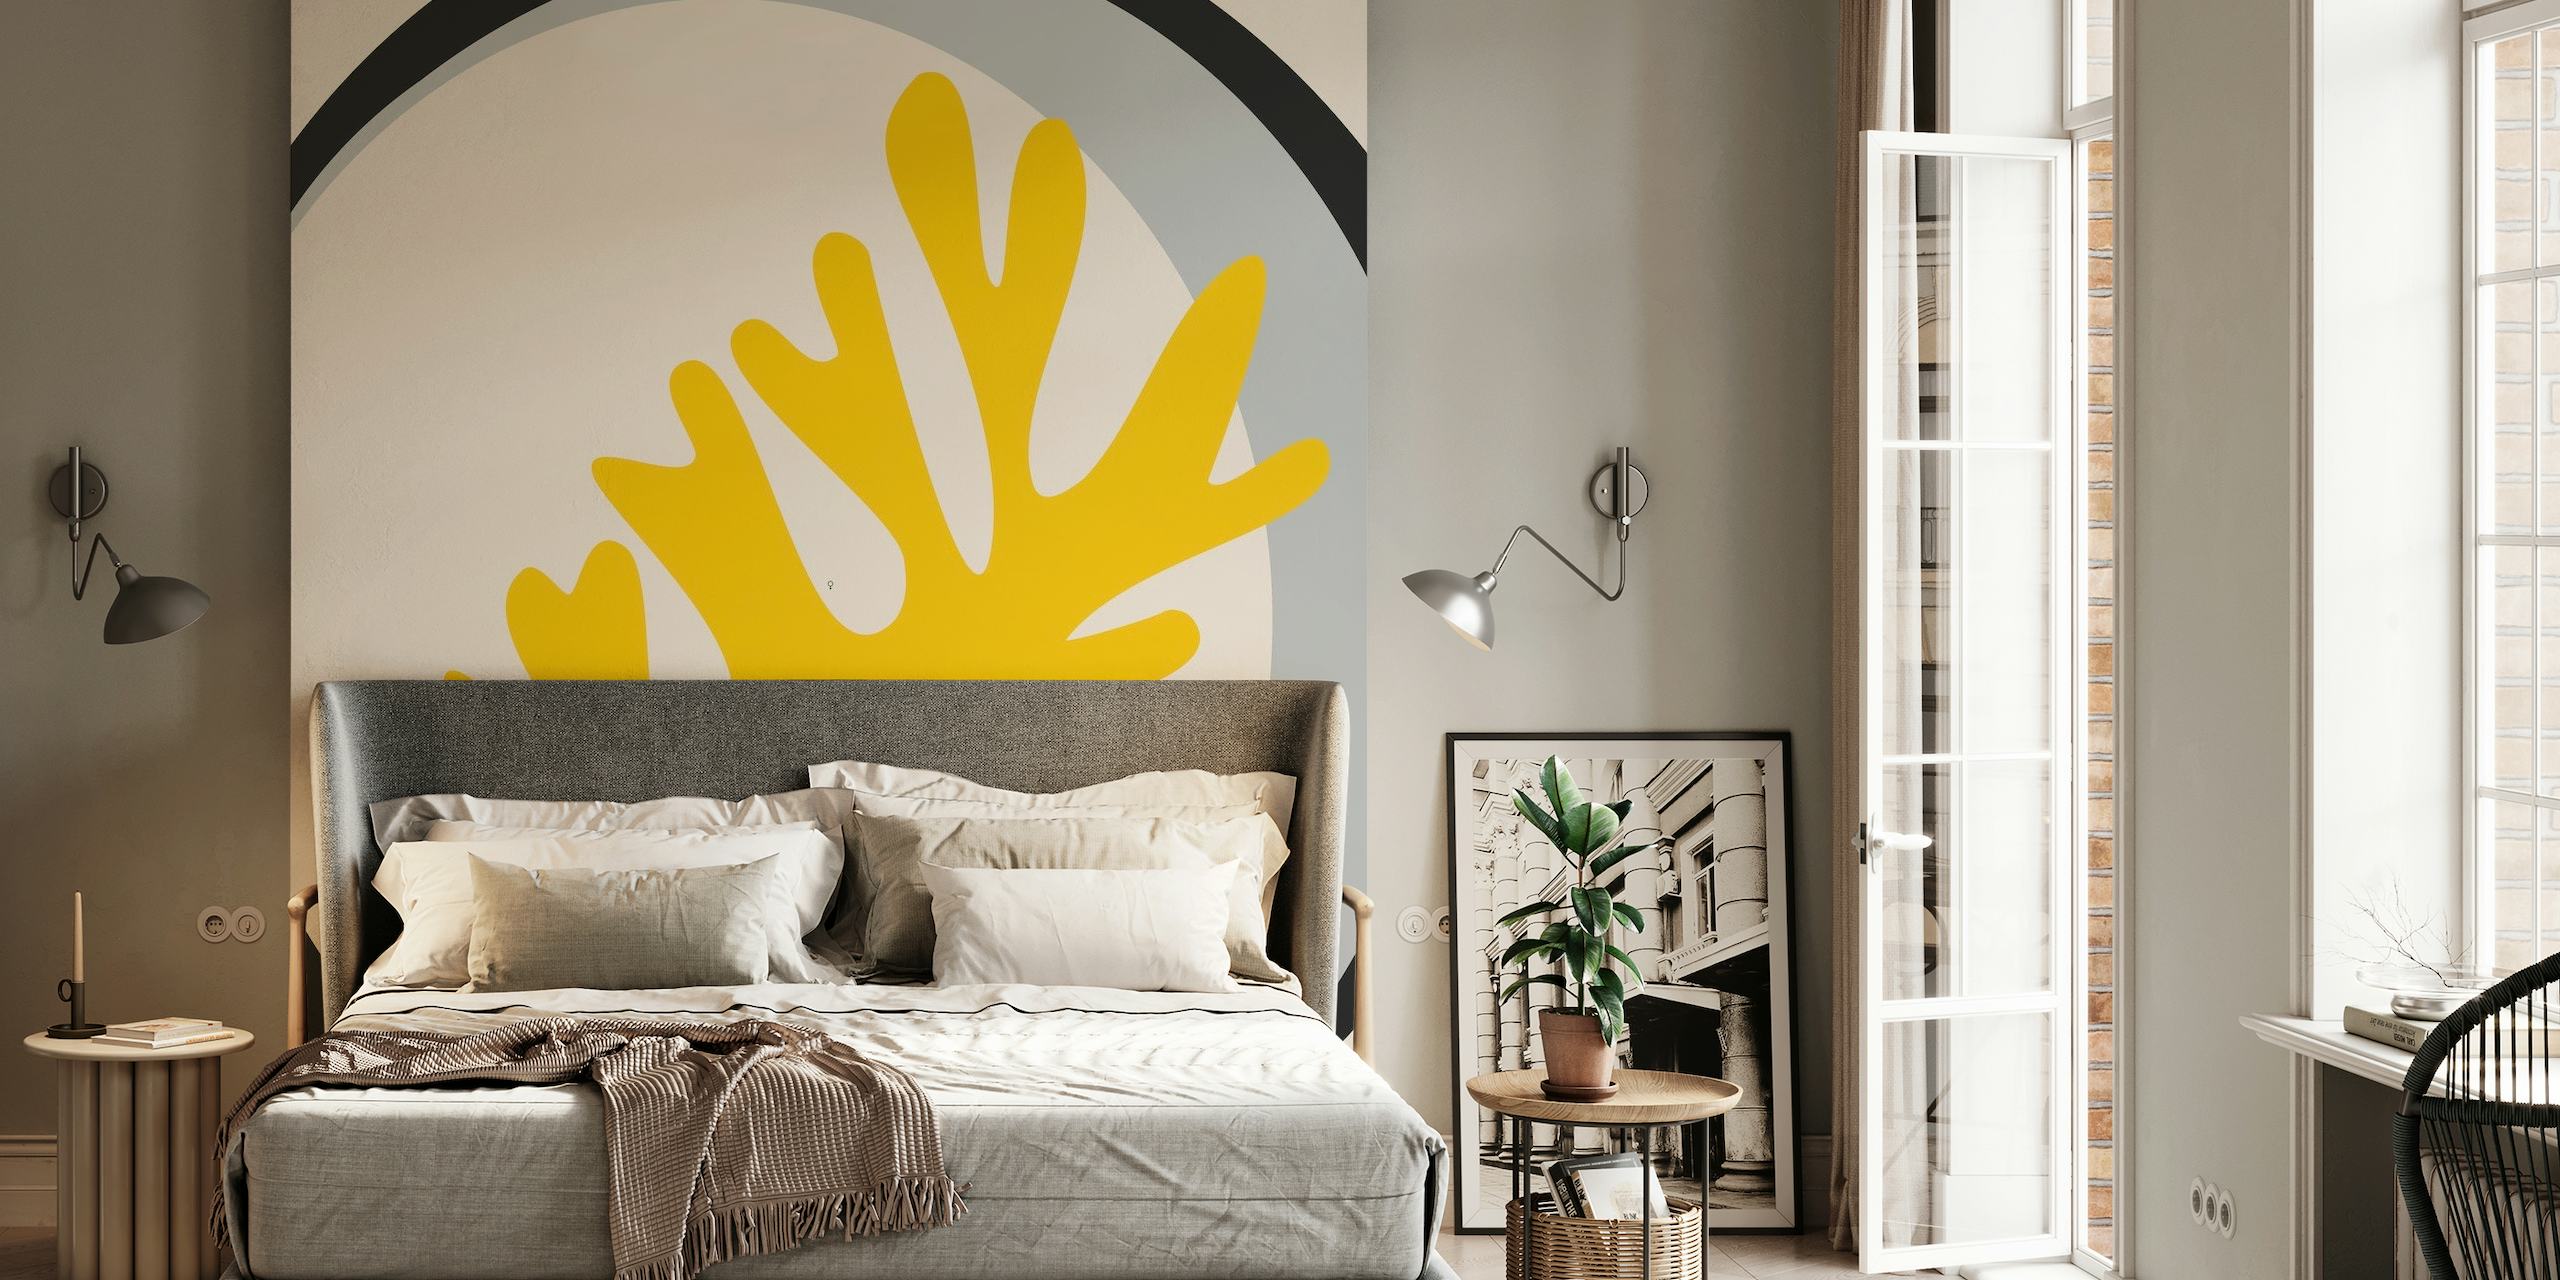 Matisse Inspired Yellow Leaf wallpaper